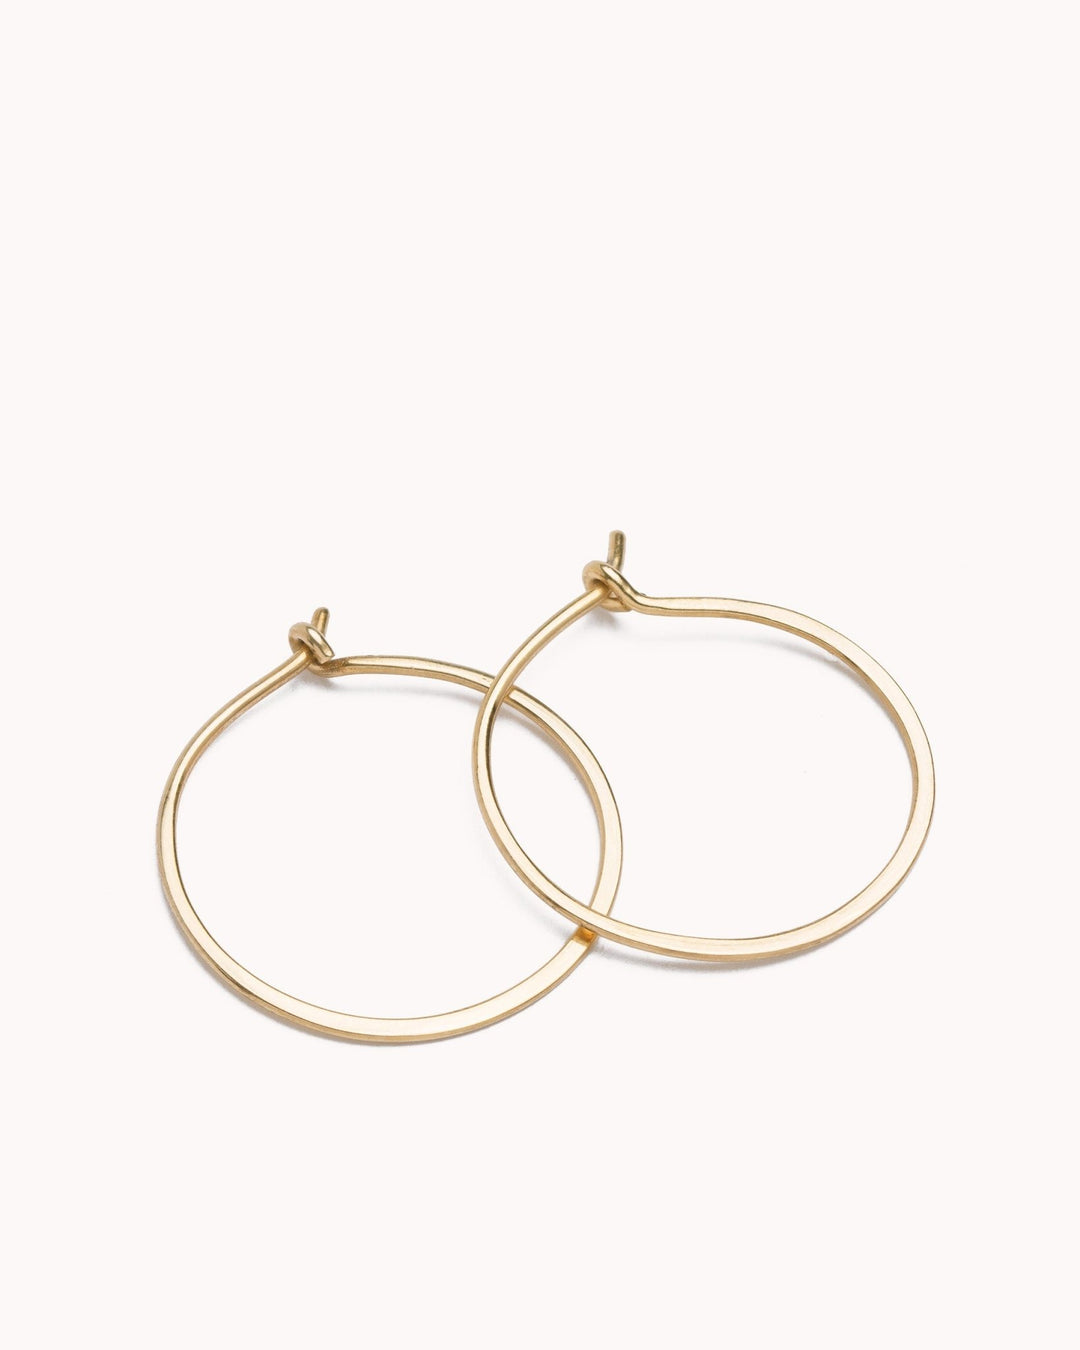 Mau Hoops Earrings - 24K Gold Plated14K Gold FilledBackUpItemsLunai Jewelry